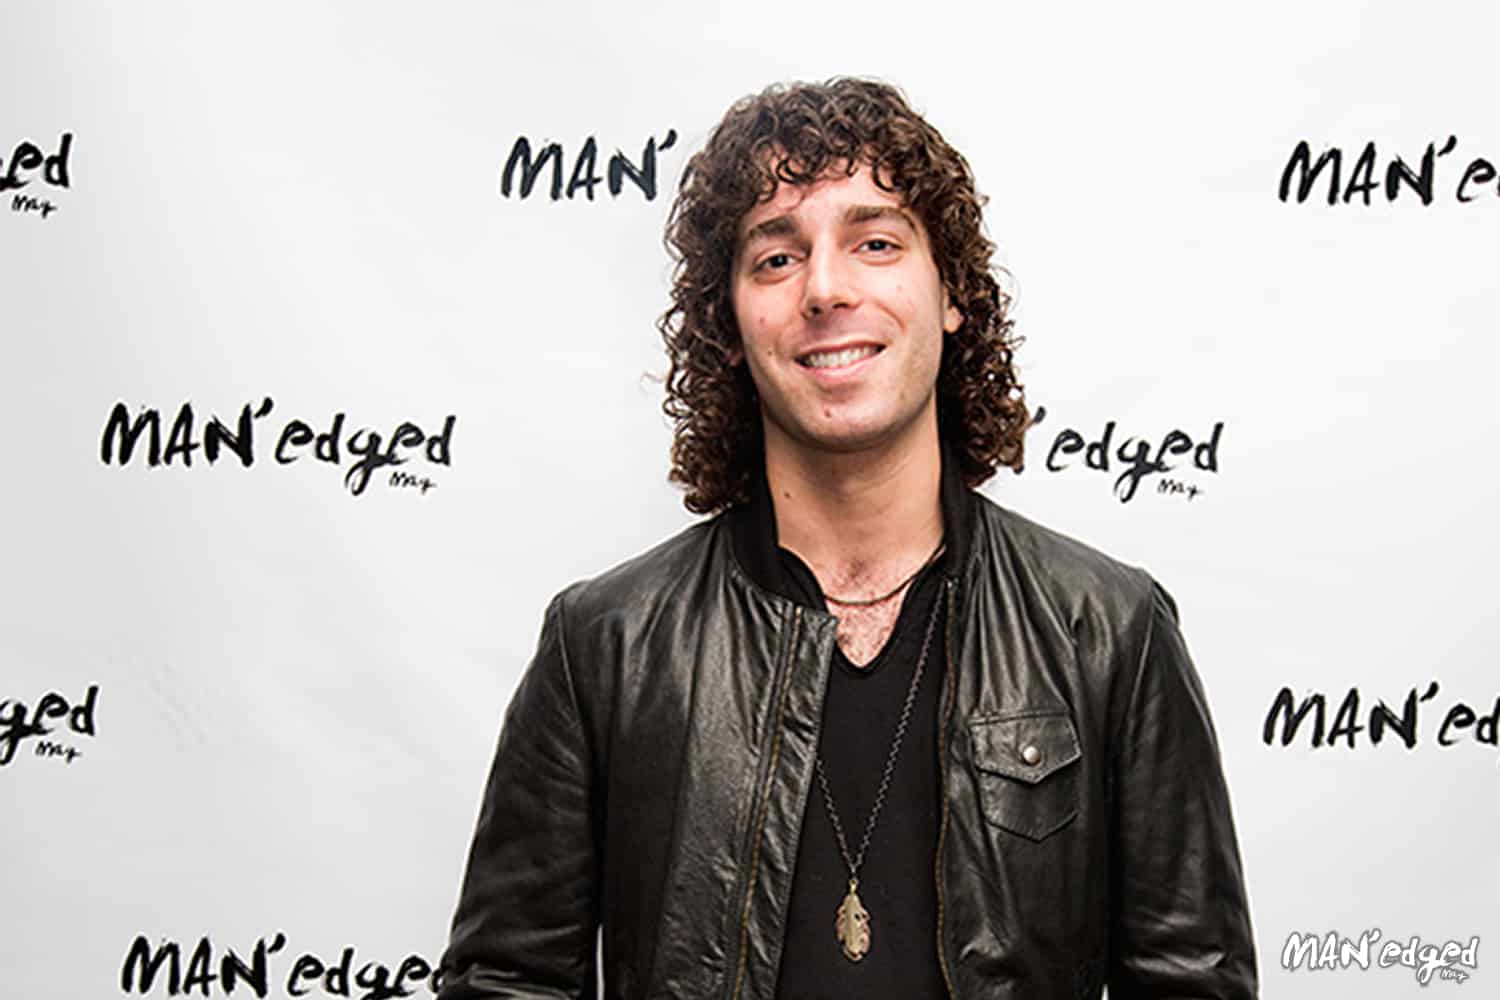 Musician Josh Taerk at the MANedged Magazine event in Soho, New York wearing leather jacket.